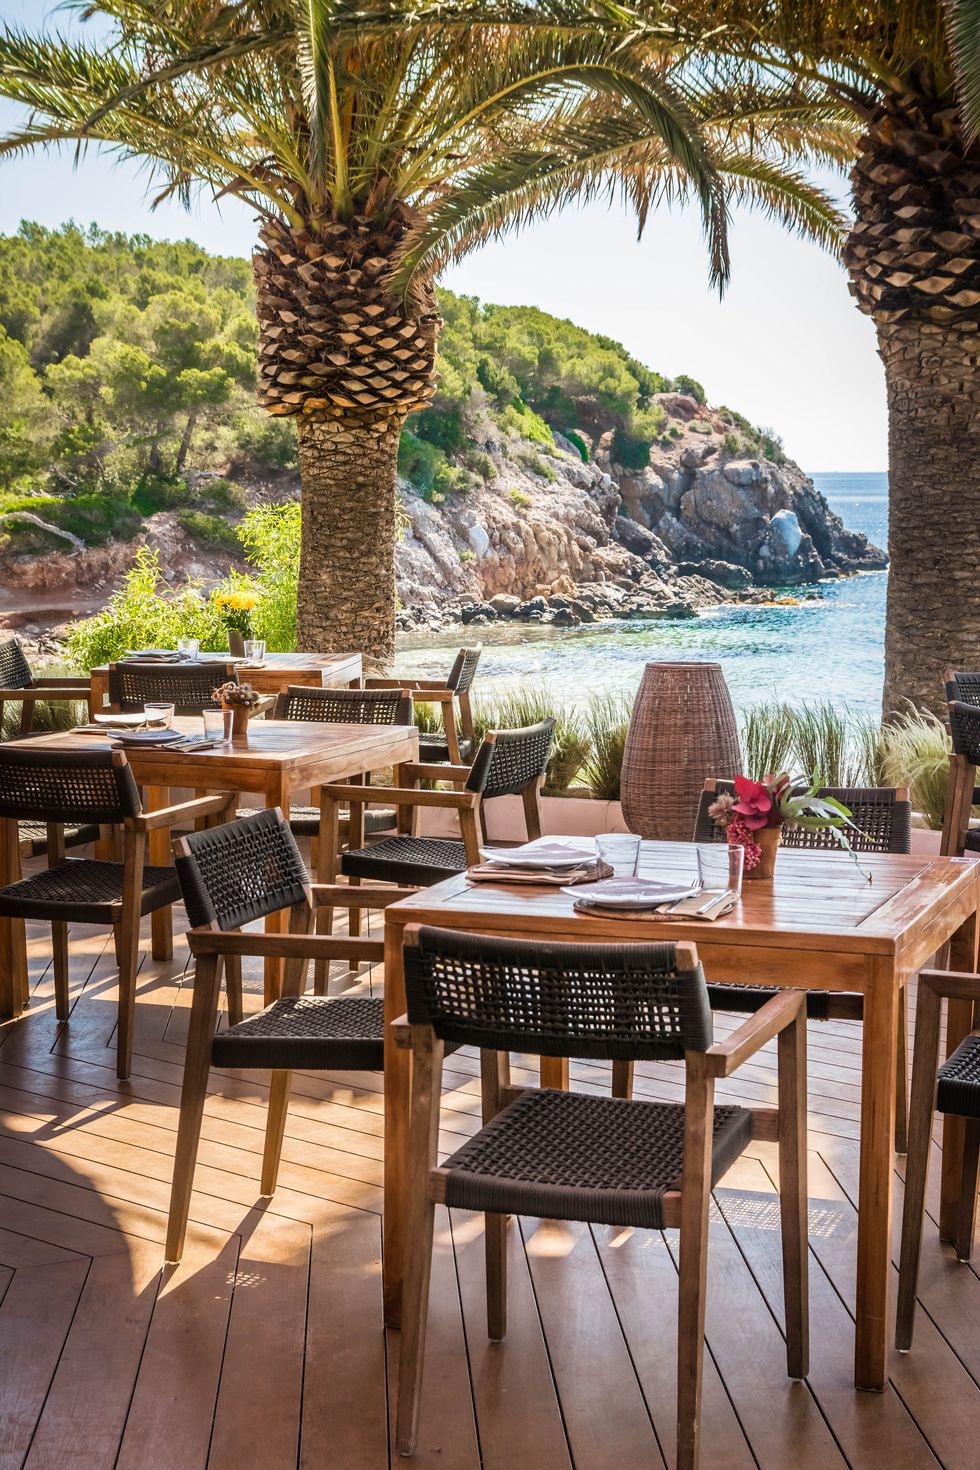 ibiza hotspots restaurants hotels